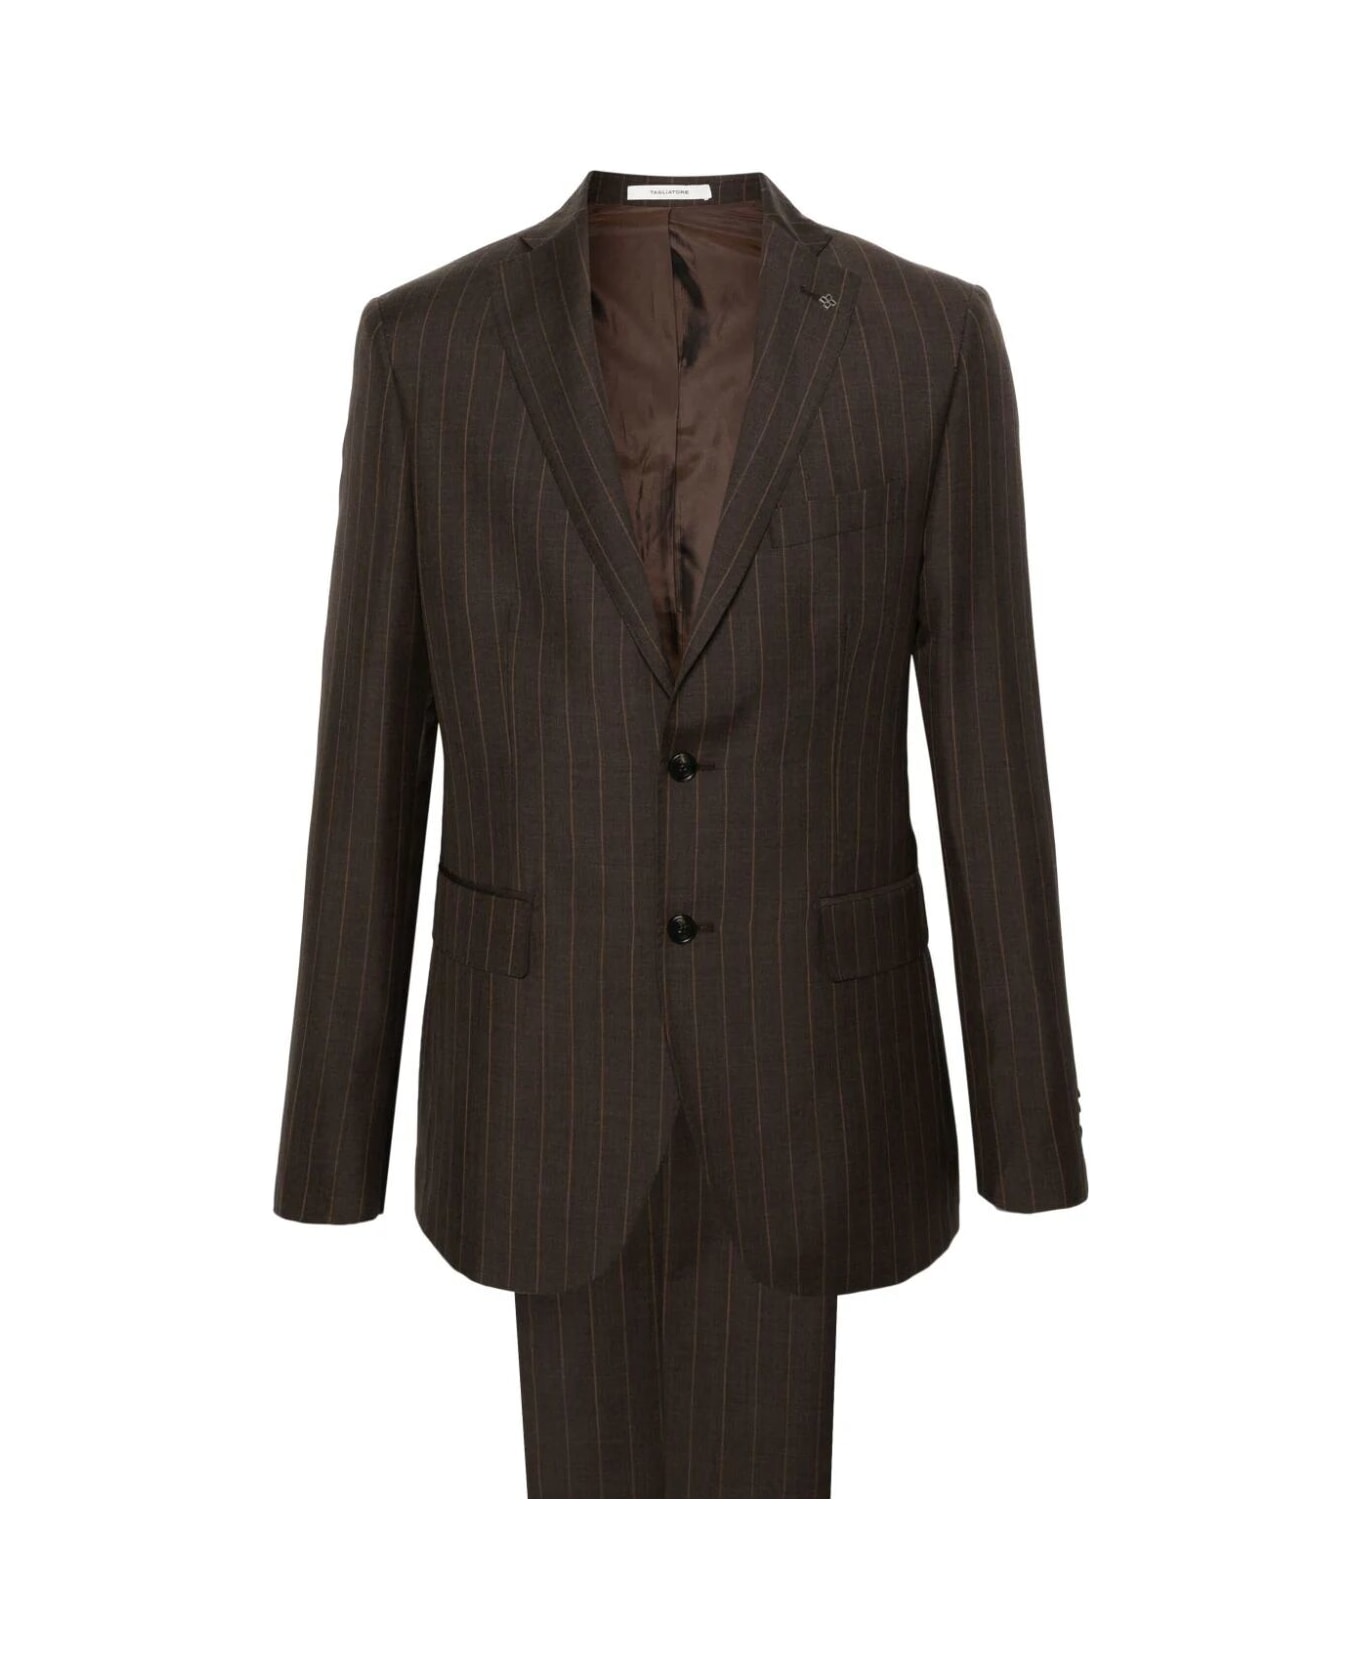 Tagliatore Pinstriped Suit - Brown スーツ